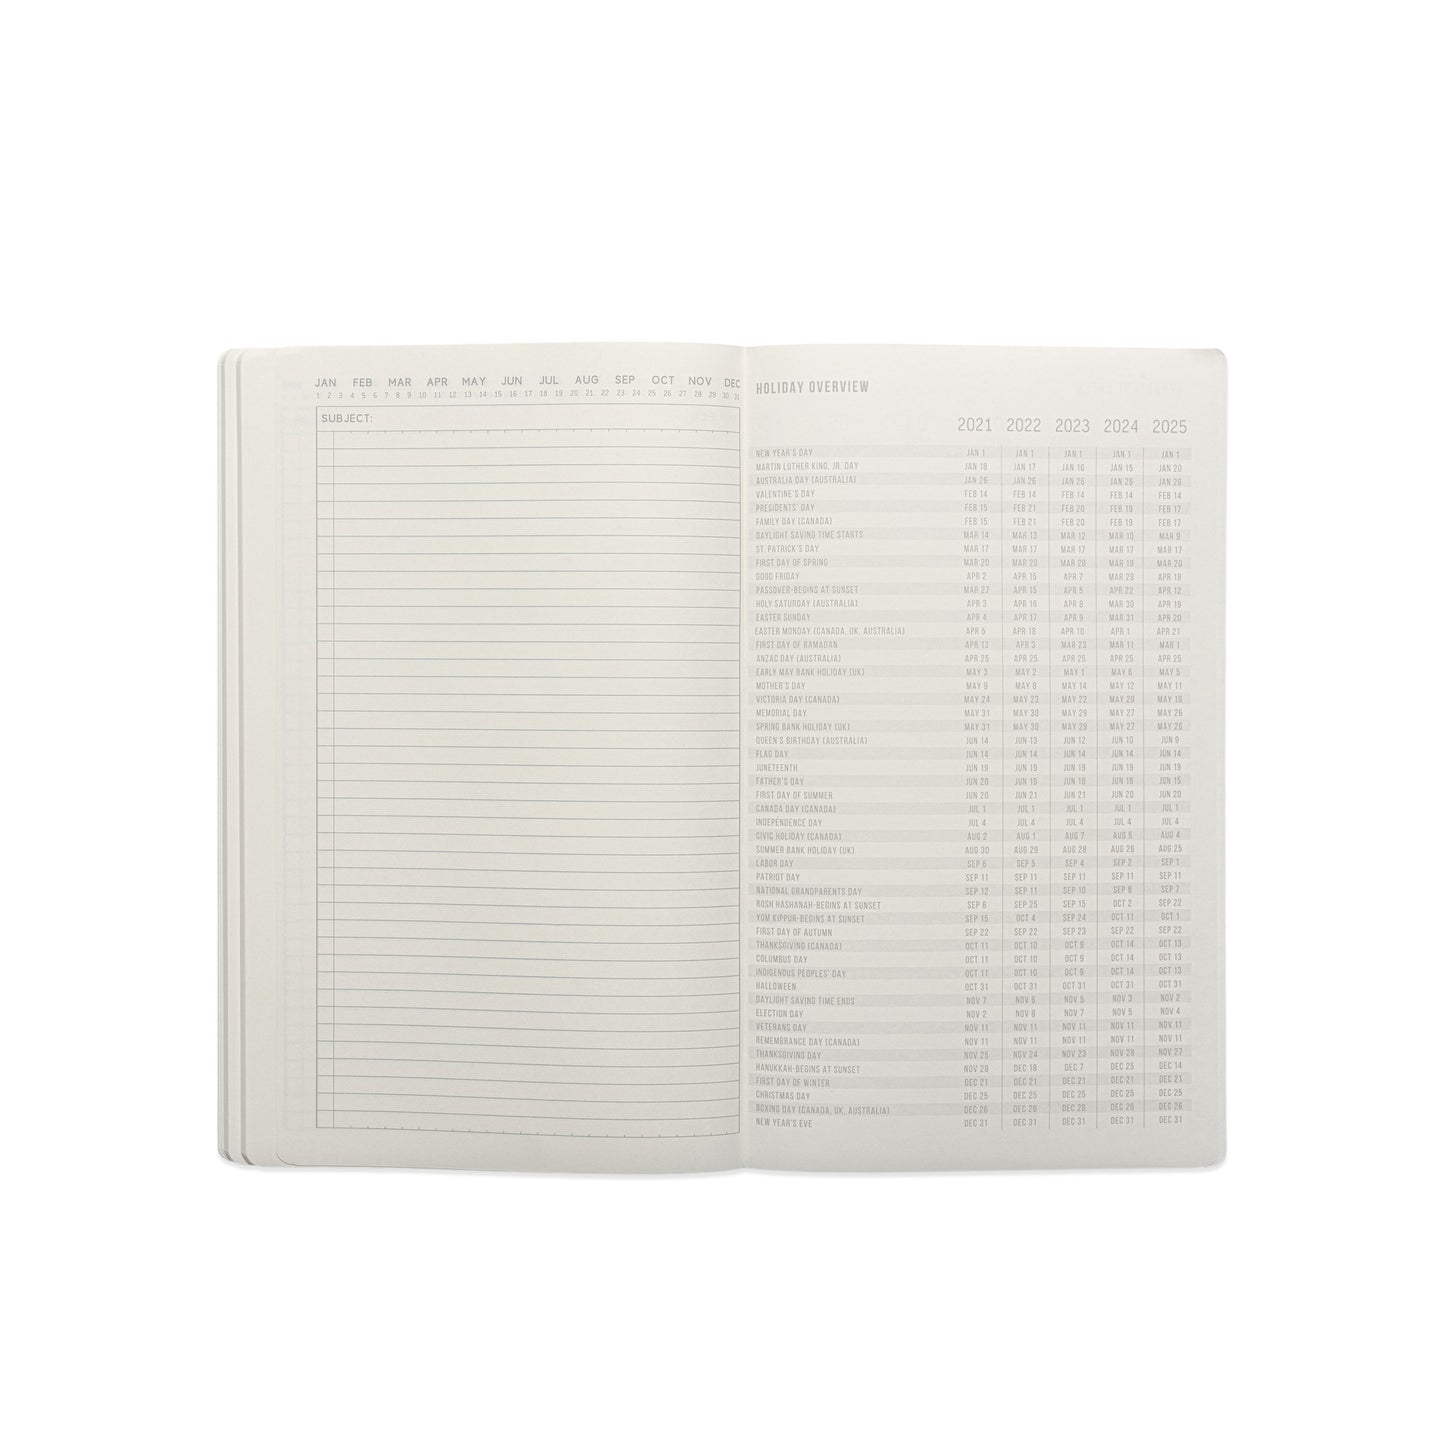 Standard Issue Tall Notebook No.17 - Ochre